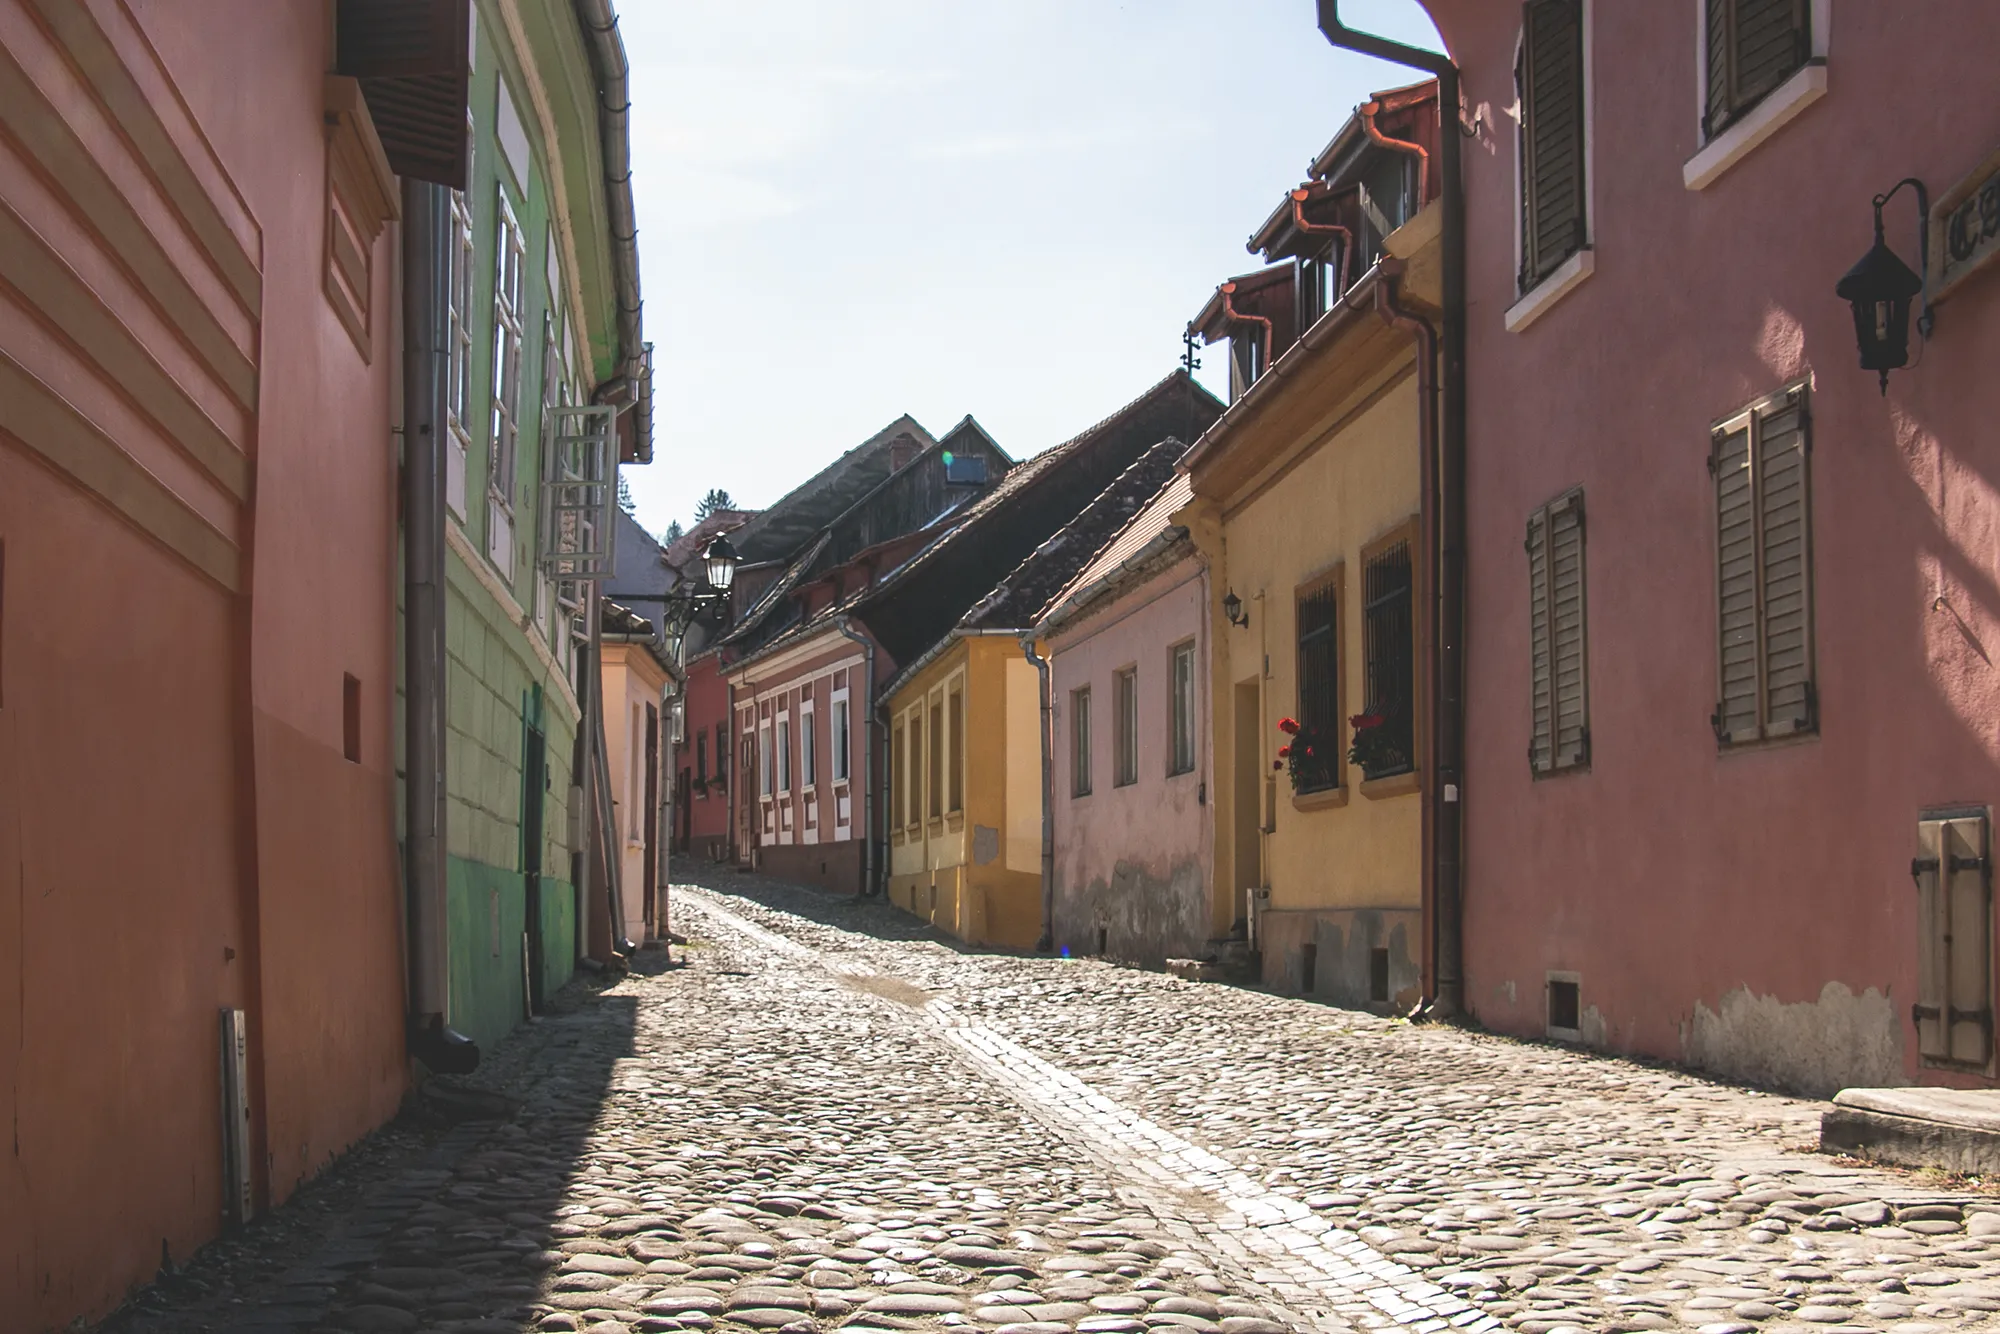 Colourful houses line a cobblestone street in Sighisoara Romania.